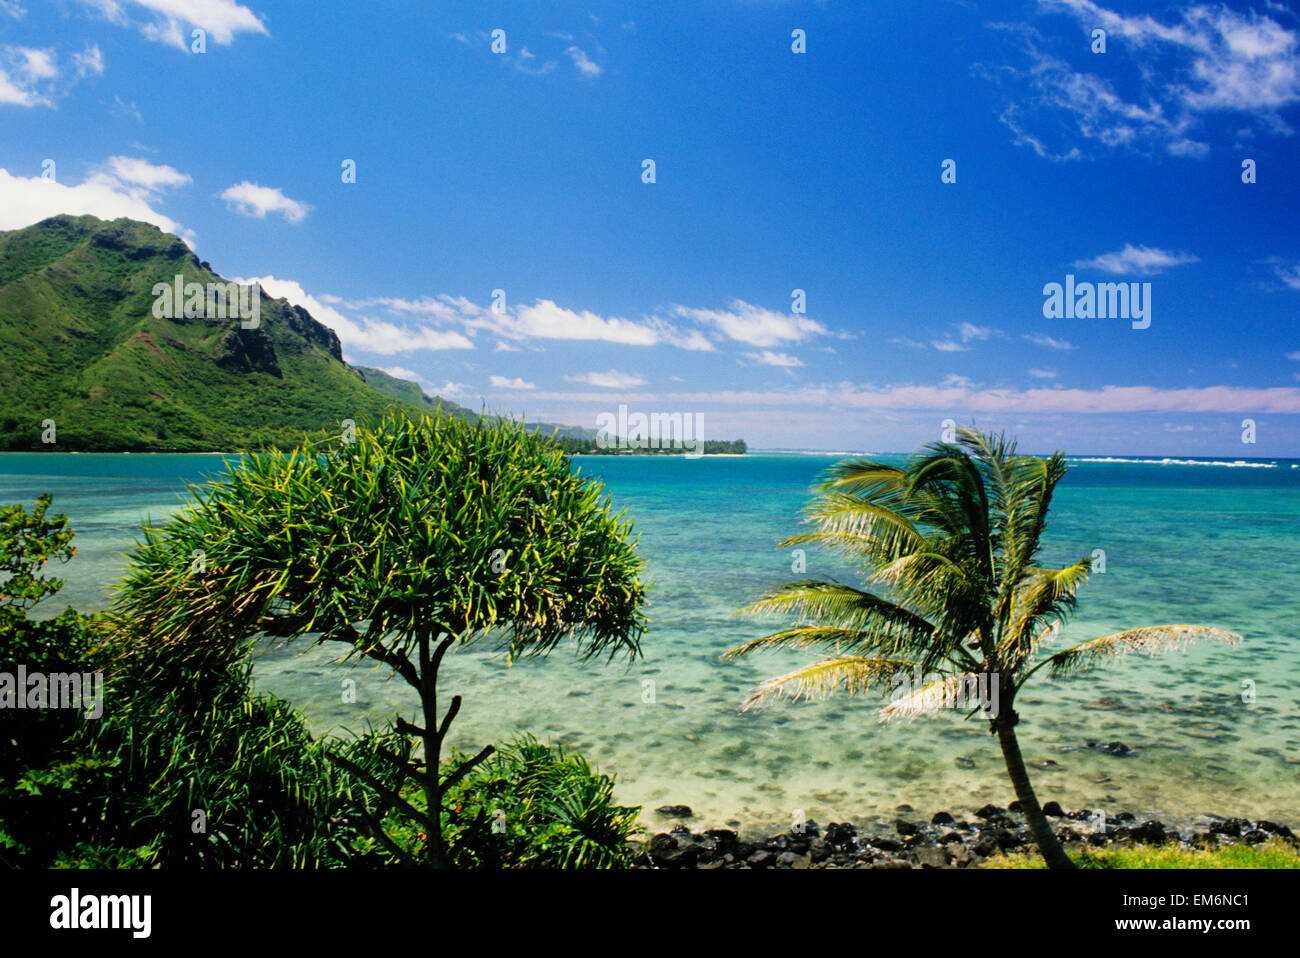 Stati Uniti d'America, Hawaii, Oahu, acqua cristallina e lussureggianti montagne in distanza; Kahana Bay, luminoso cielo blu Foto Stock